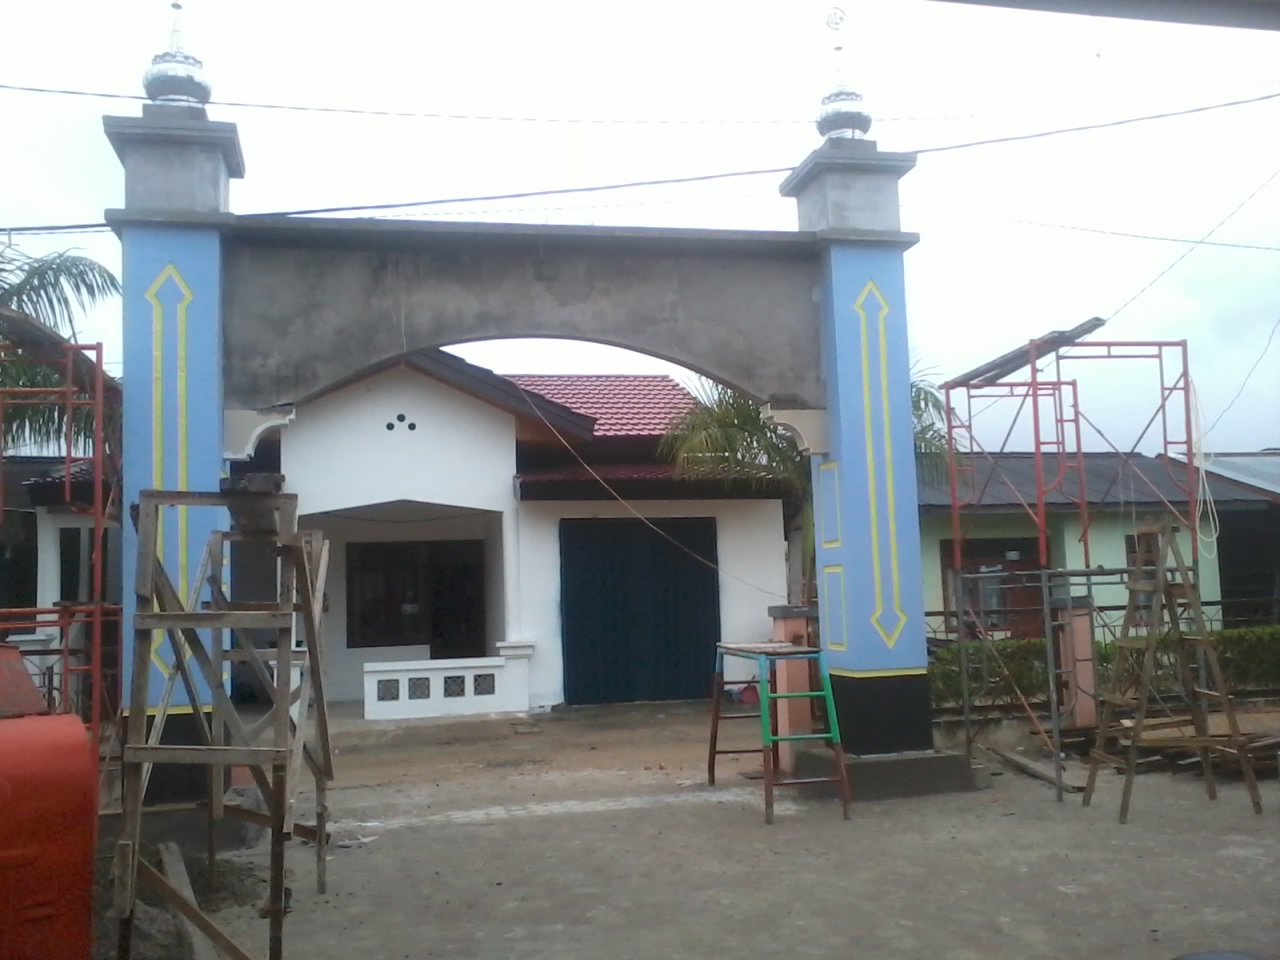 Desain Gapura  Masjid Minimalis  Rumah Joglo Limasan Work